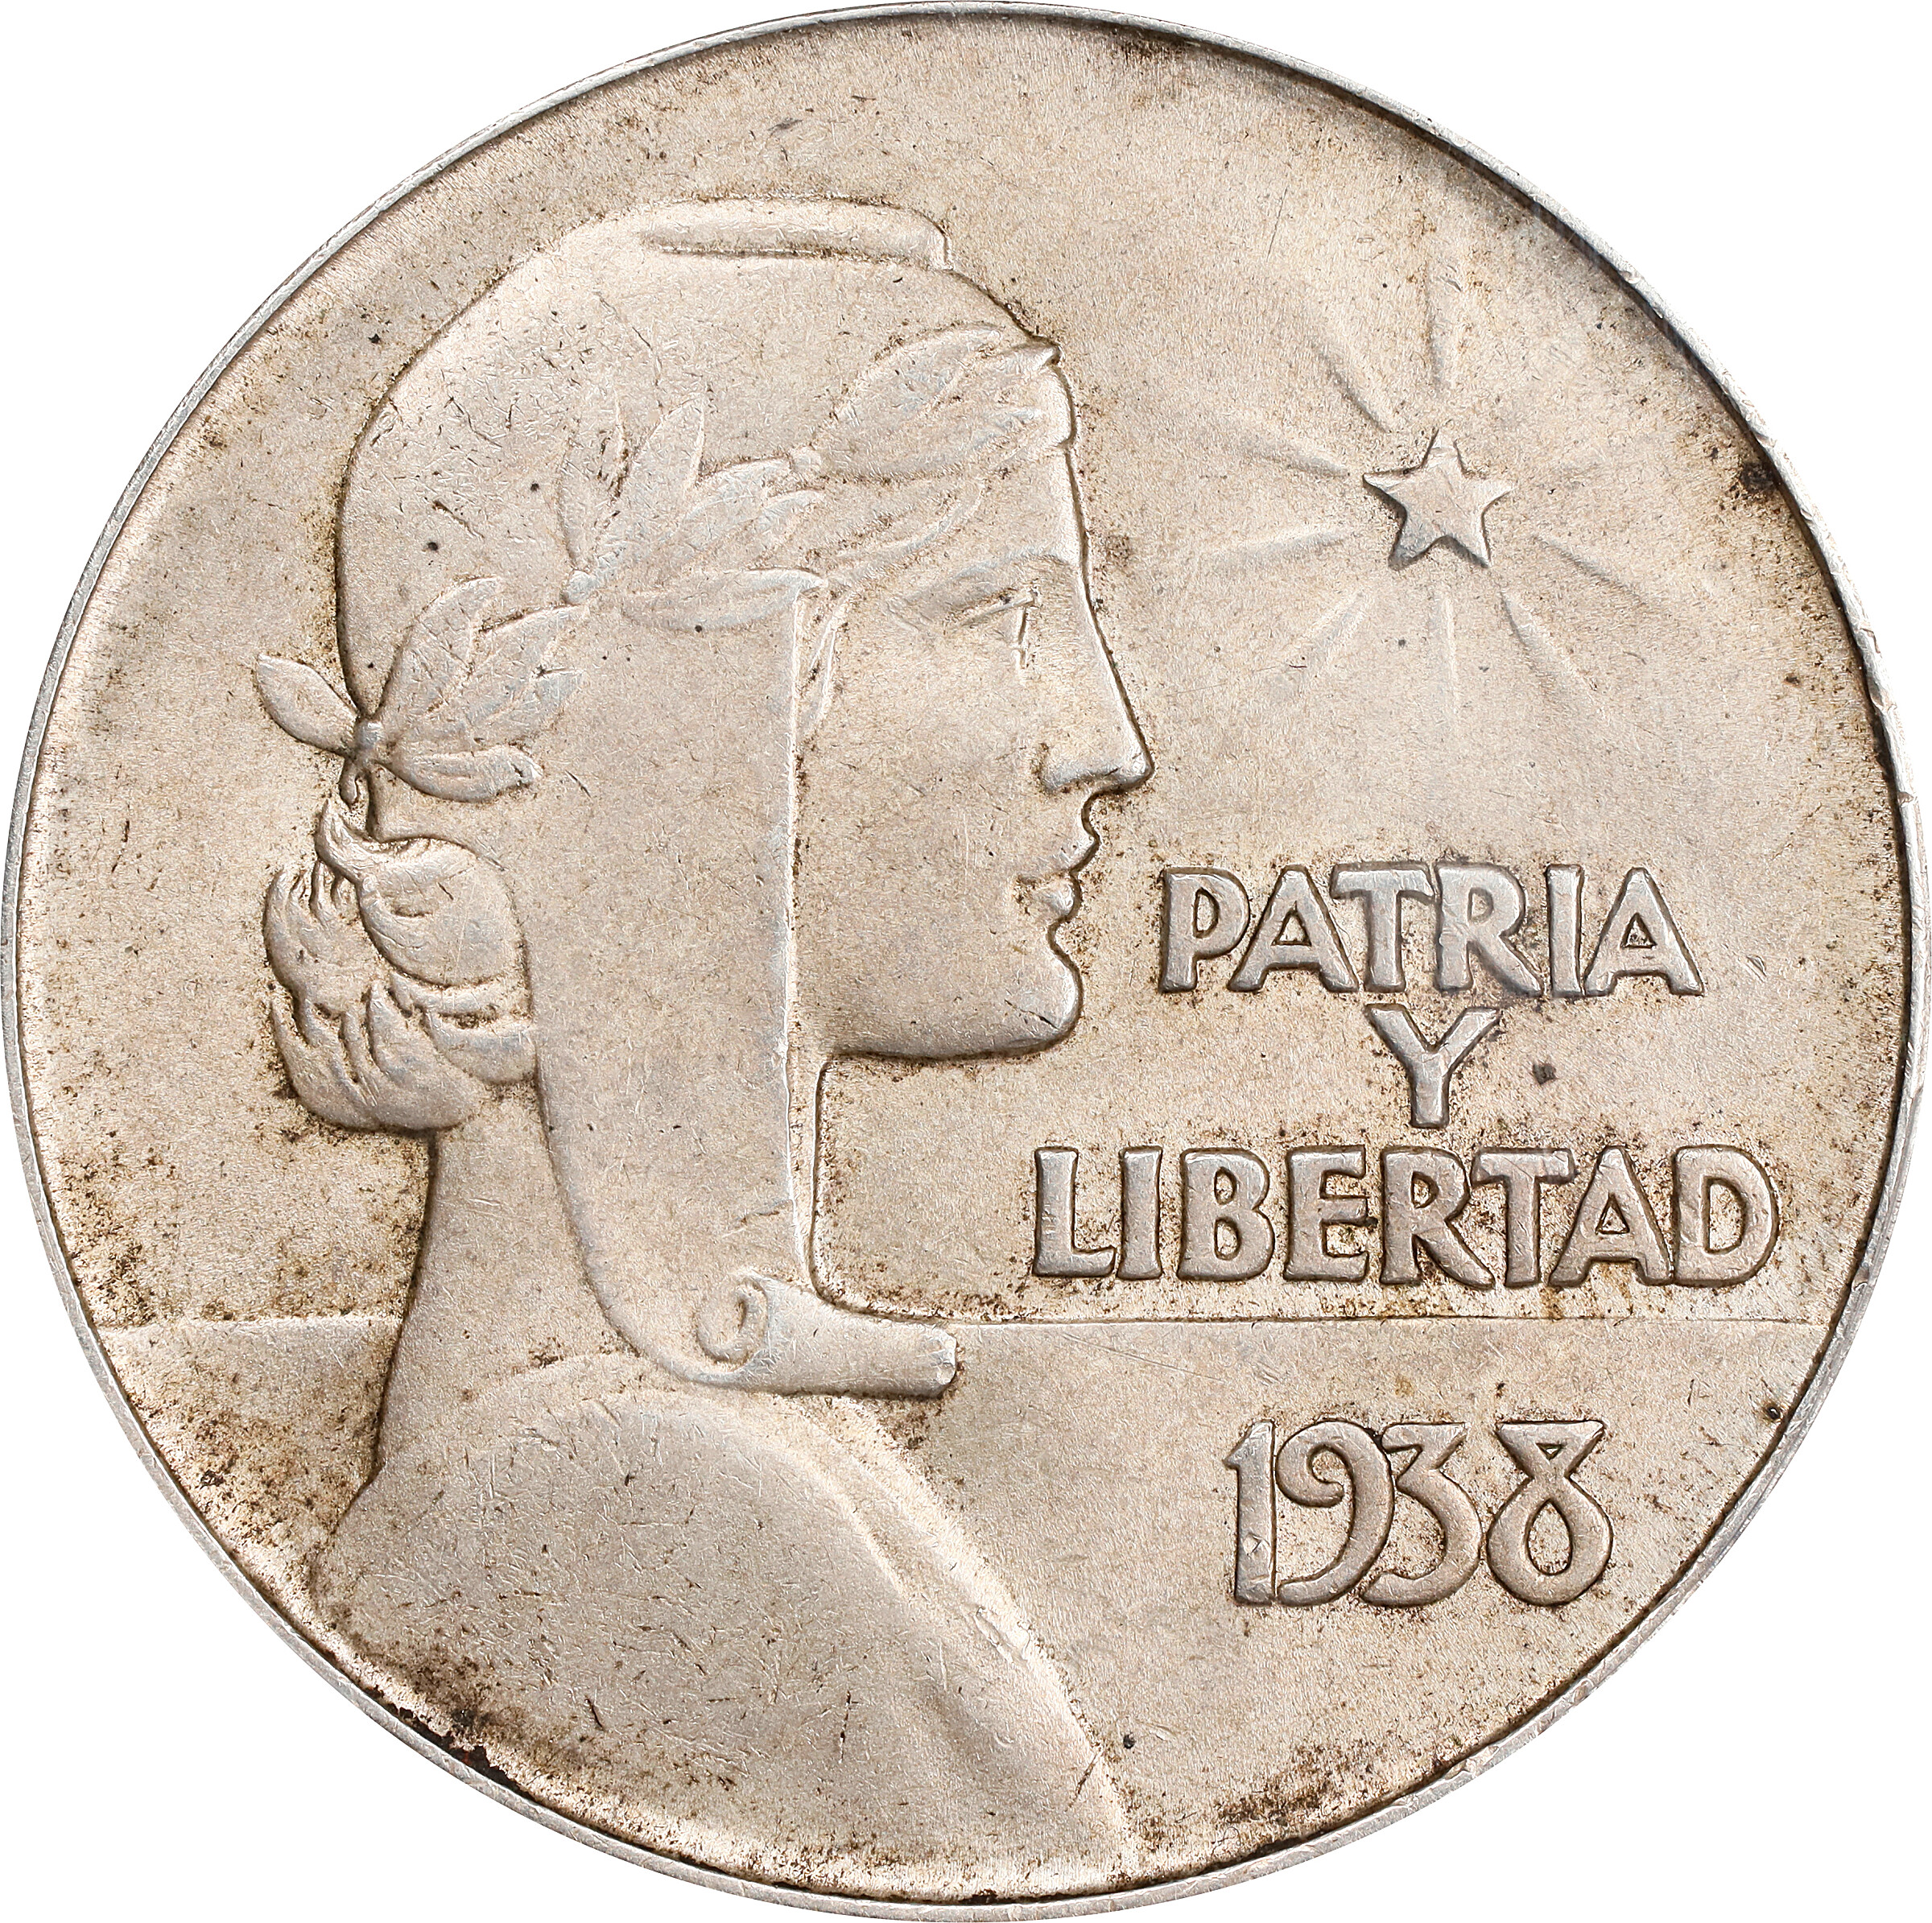 Mexican Libertad 1 oz Silver Coin  Silver Coins for Sale Online - Lost  Dutchman Rare Coins